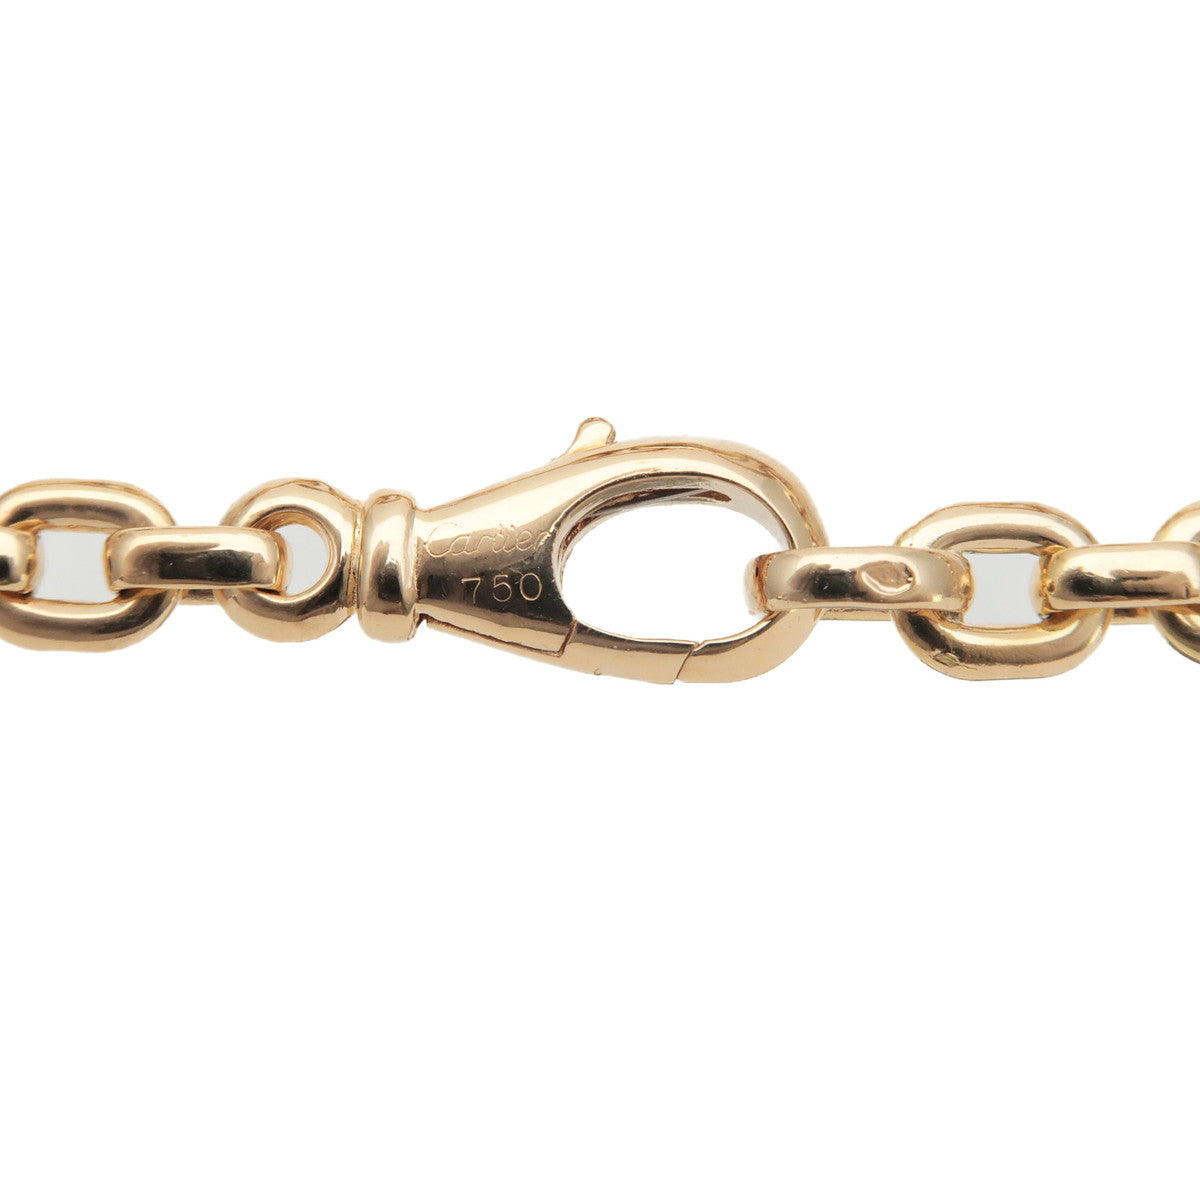 Cartier Meplat Chain Bracelet K18YG 750YG Yellow Gold Calcier